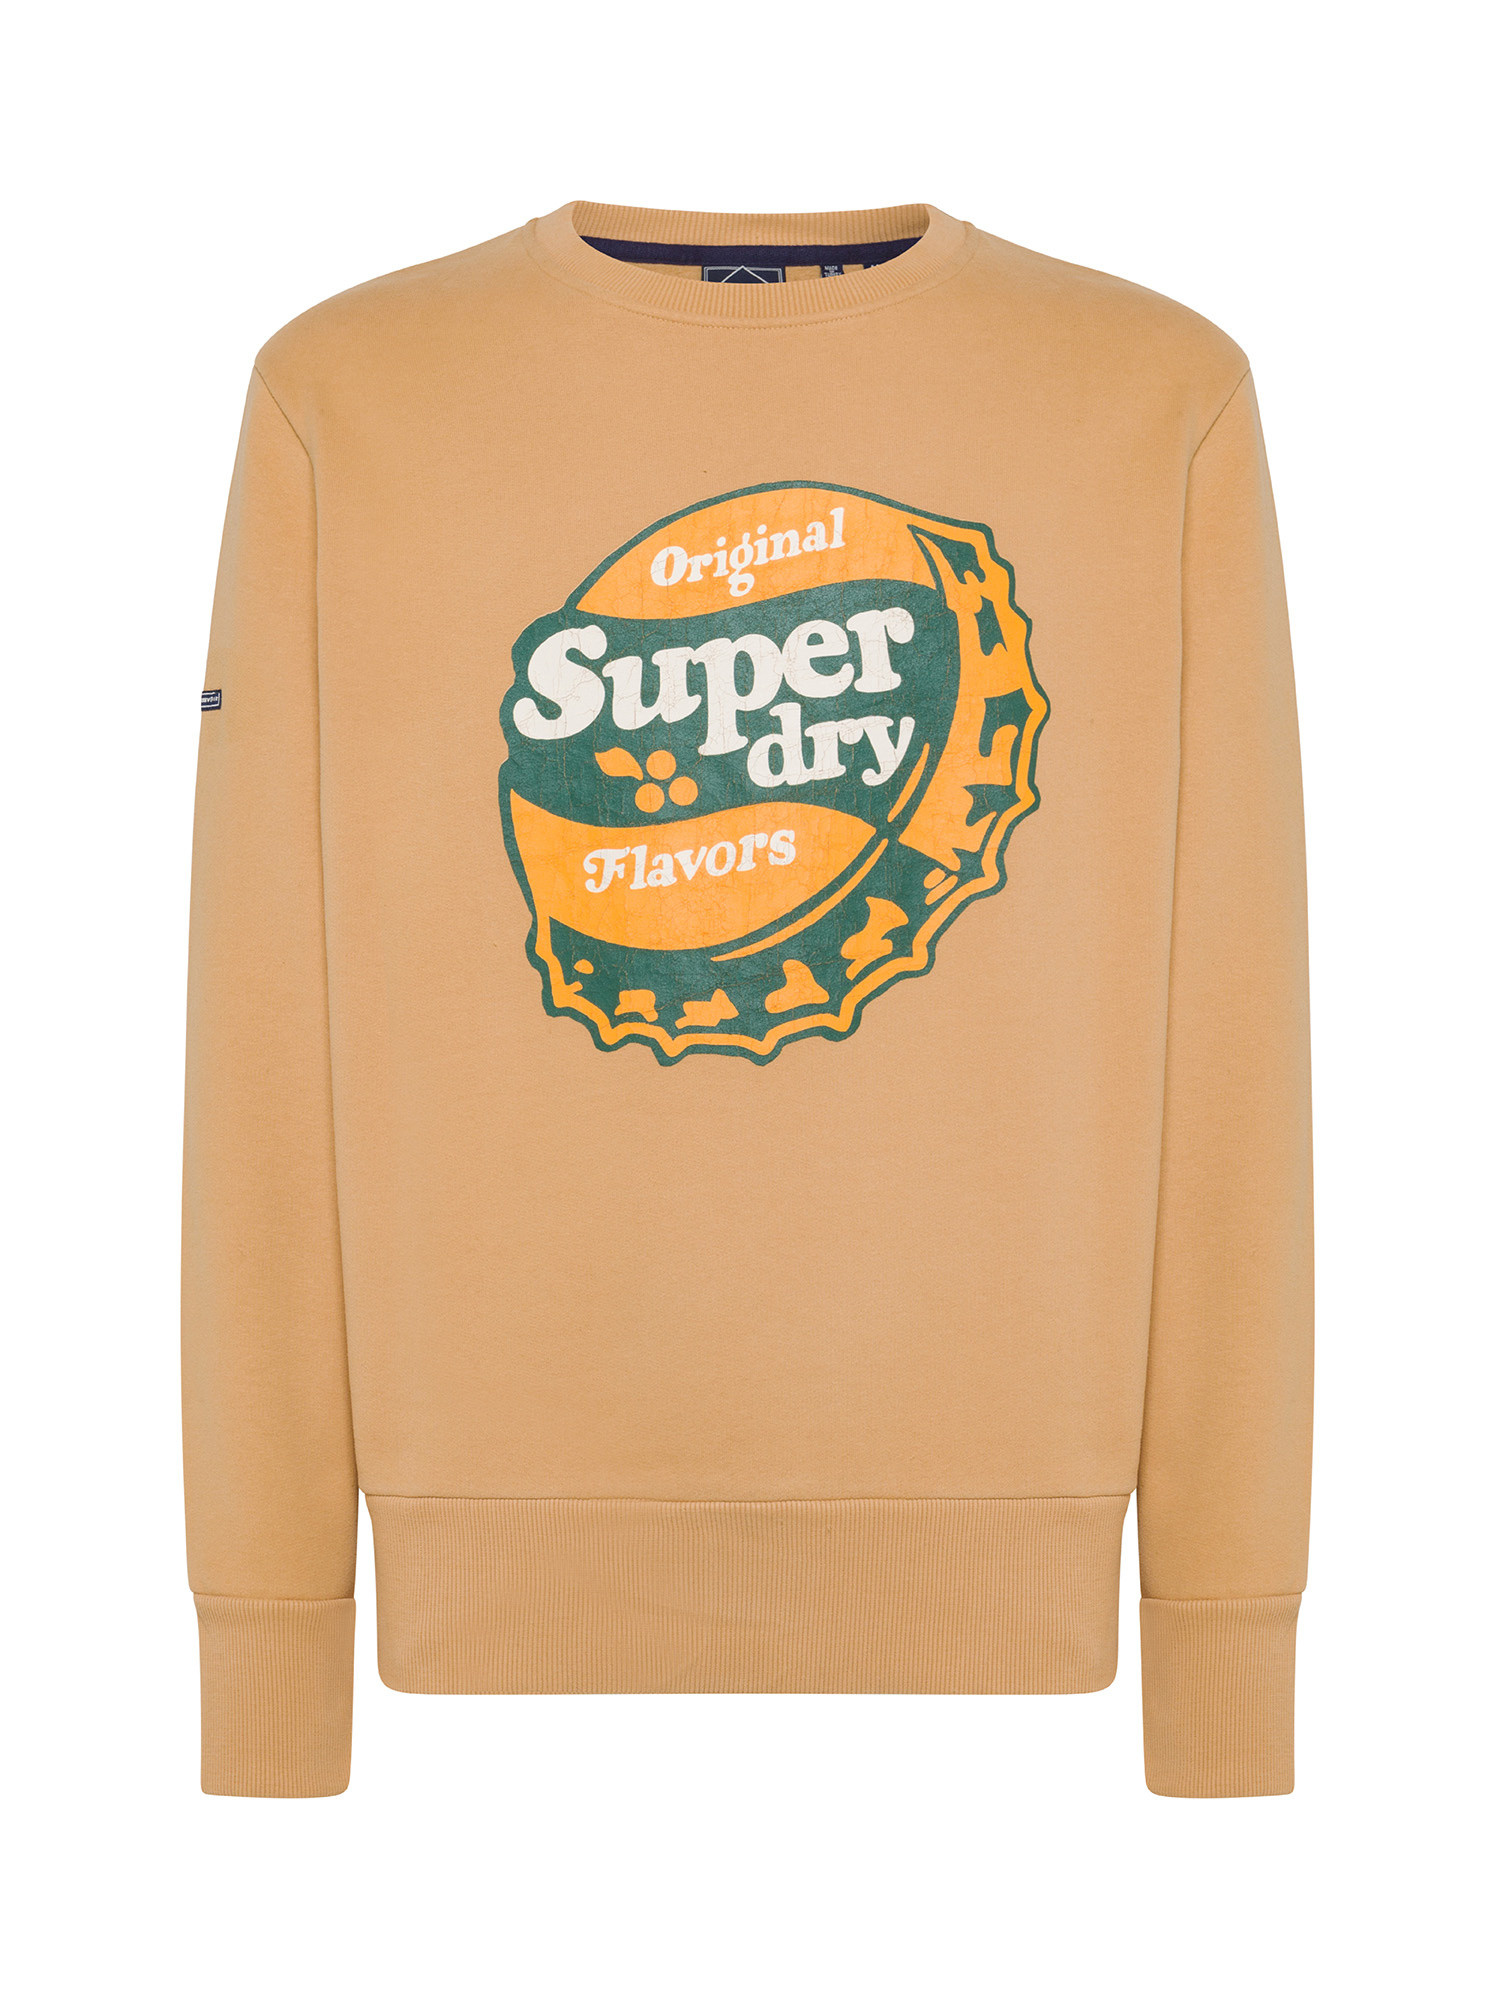 Superdry - Crewneck sweatshirt with print, Yellow, large image number 0